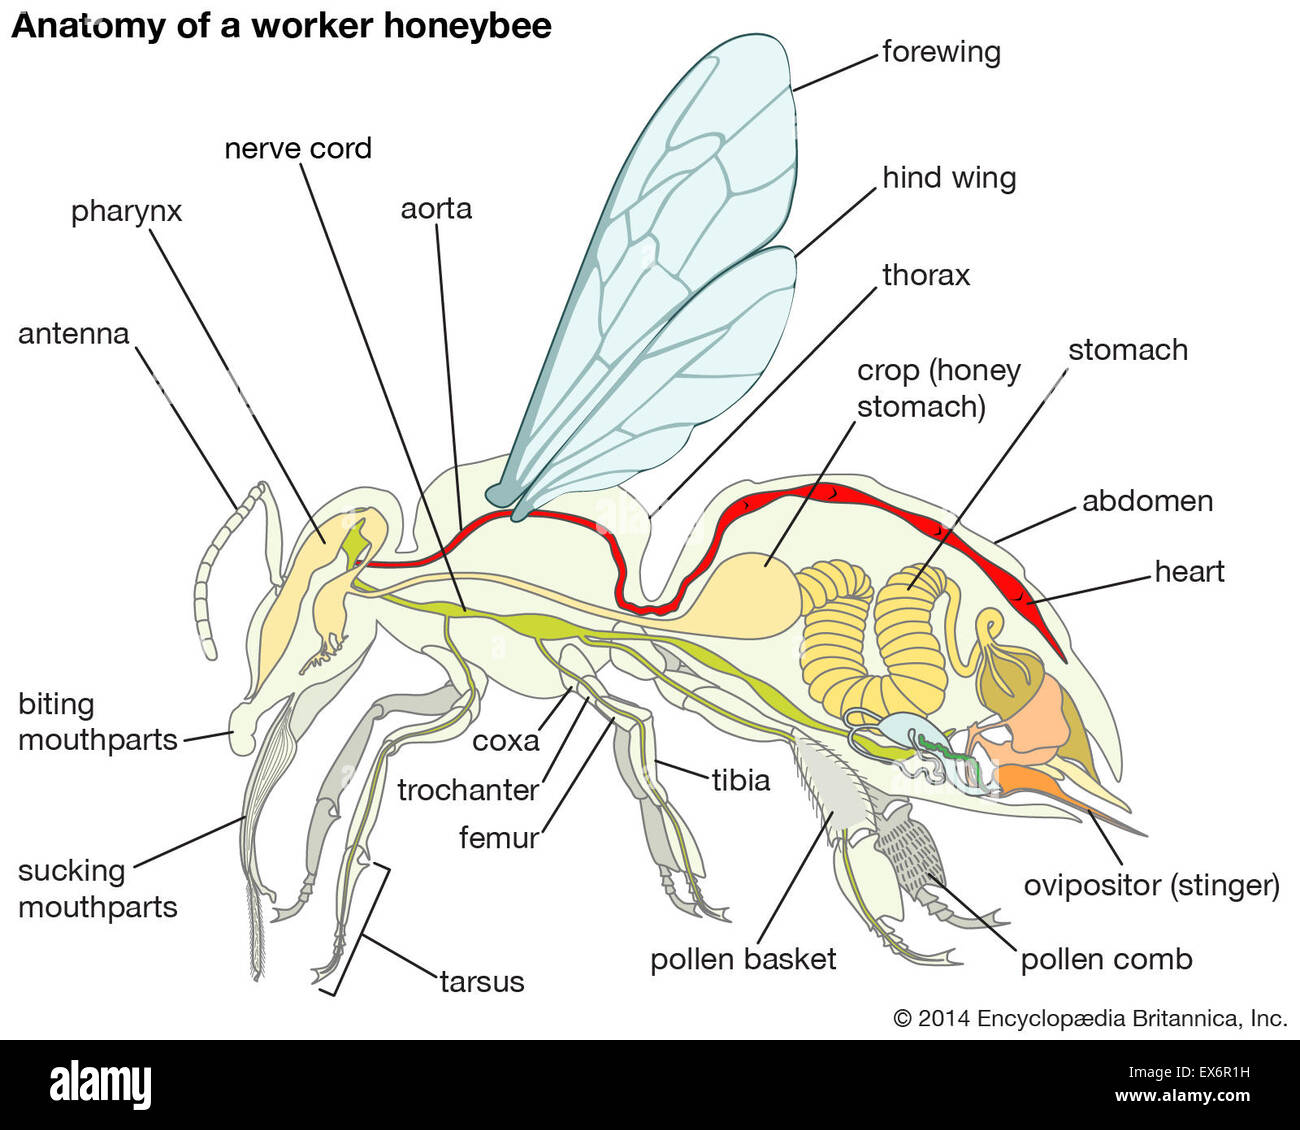 Anatomy of a worker honeybee Stock Photo